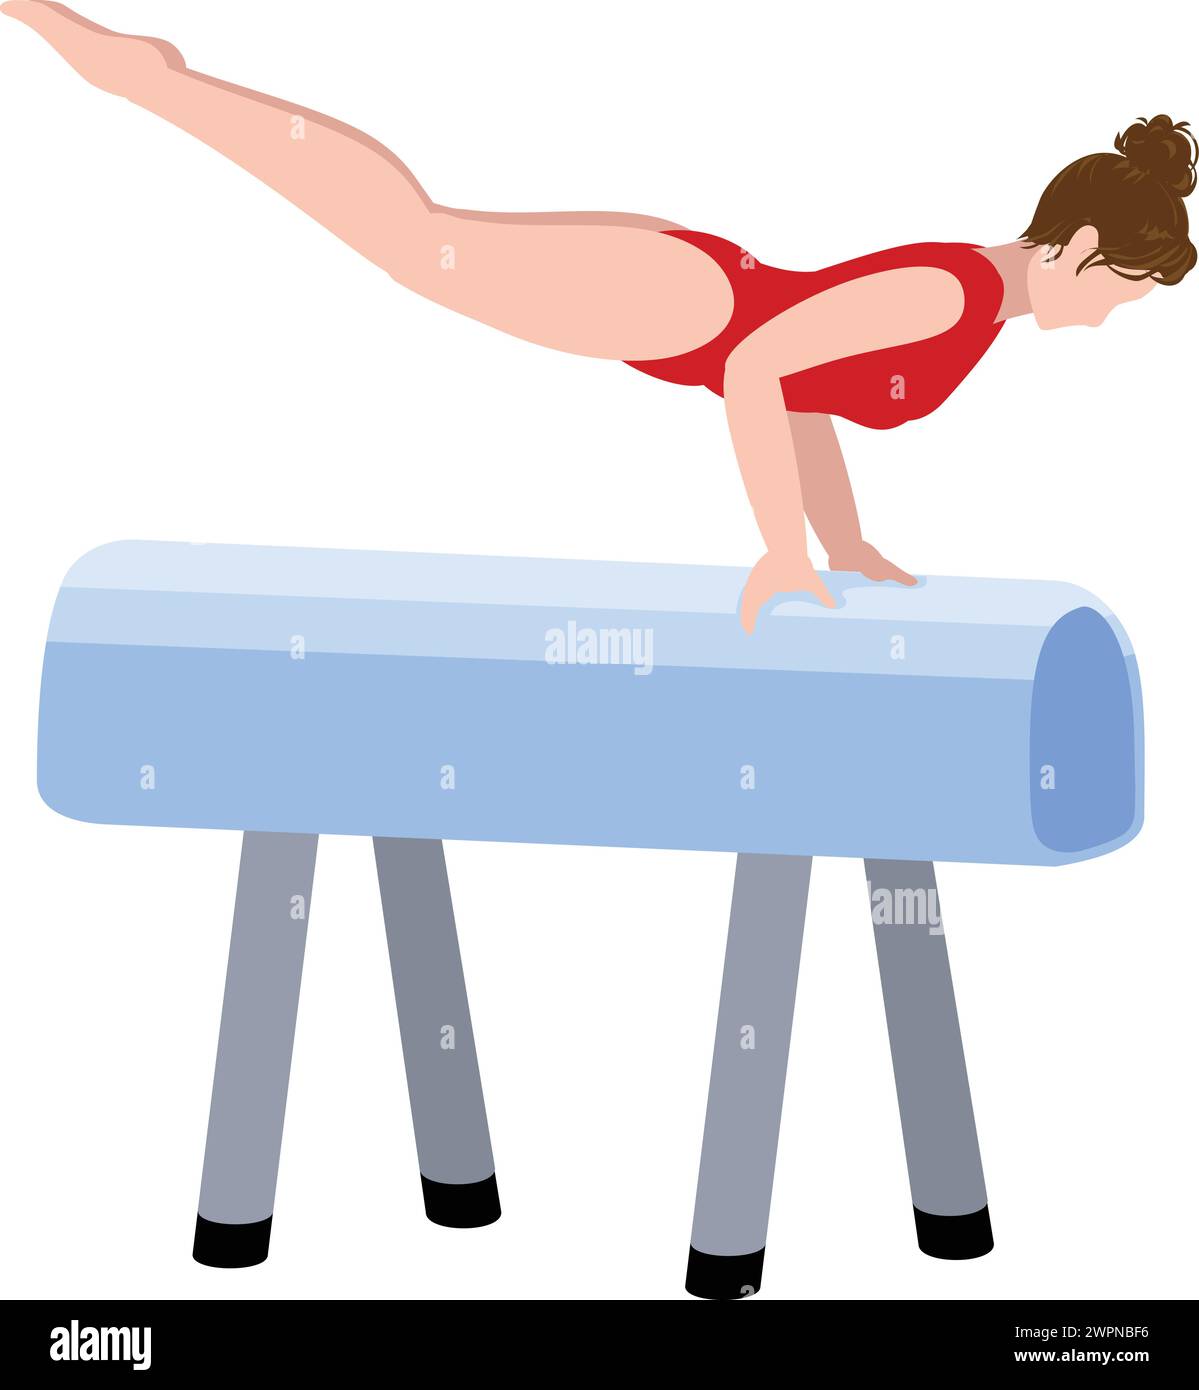 Exercise pommel horse icon cartoon vector. Indoor female person training. Sport acrobatic Stock Vector